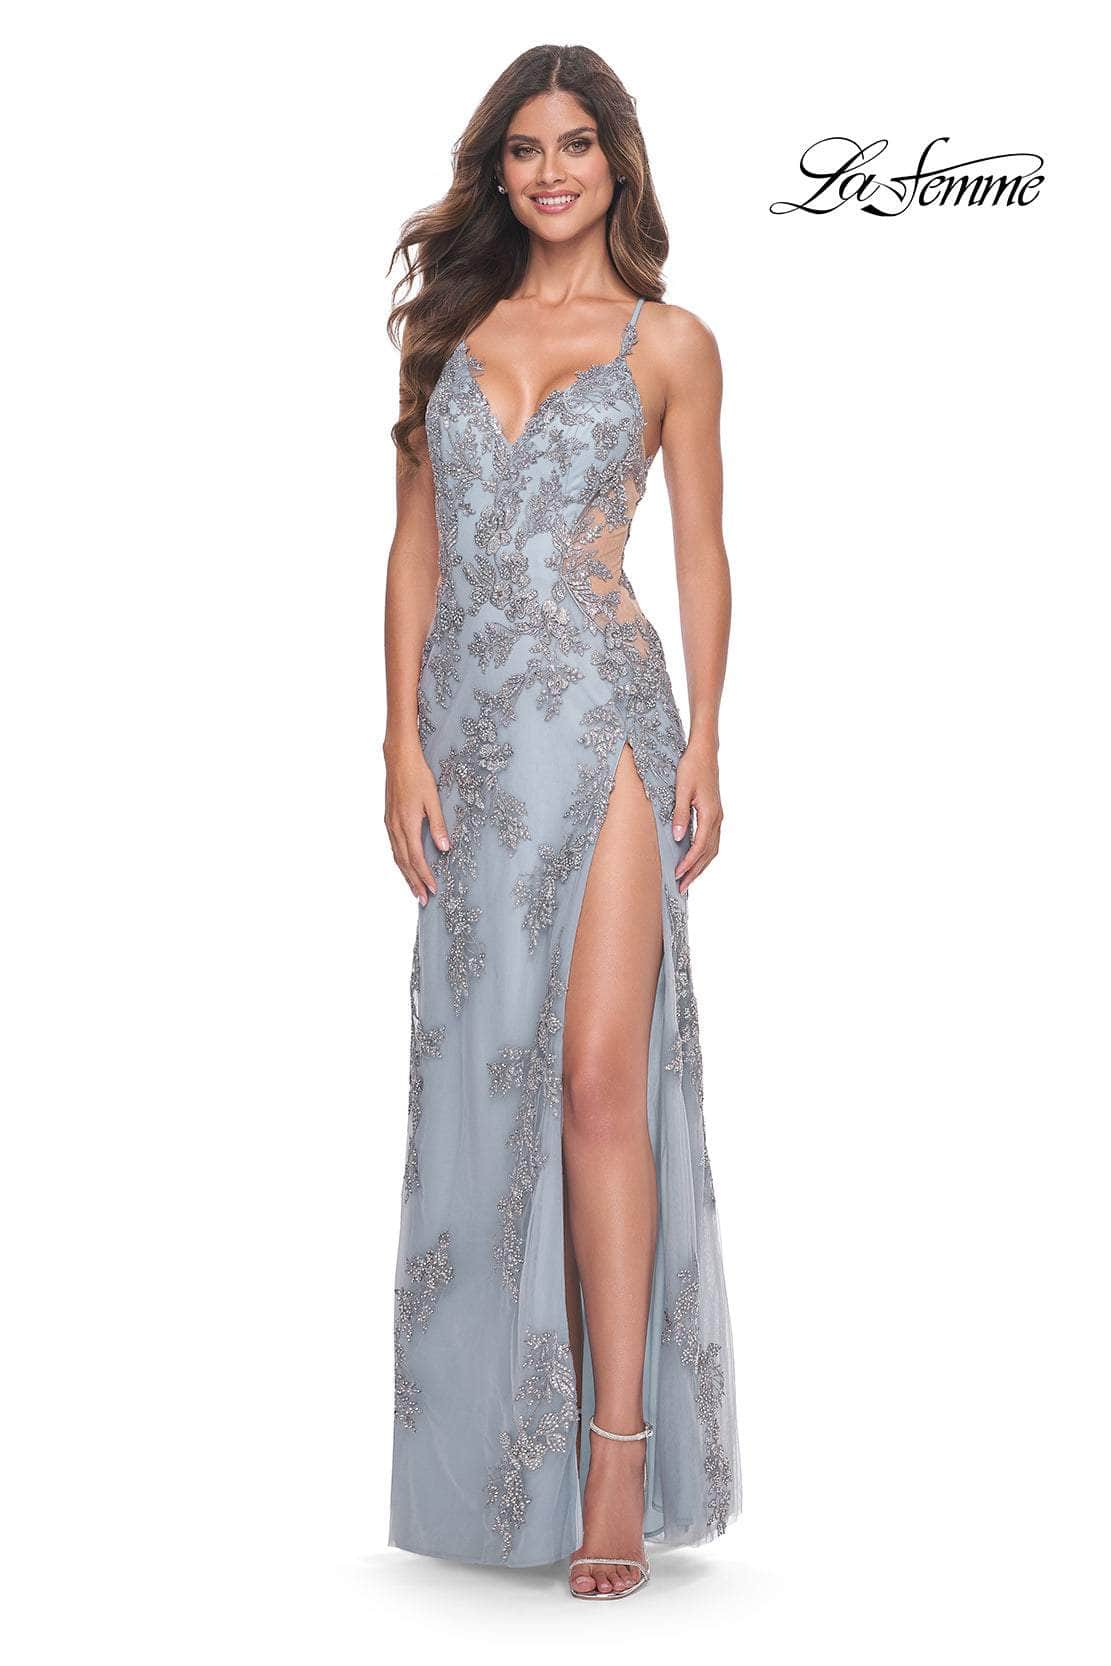 La Femme 32074 - Embroidered Illusion Side Prom Dress
